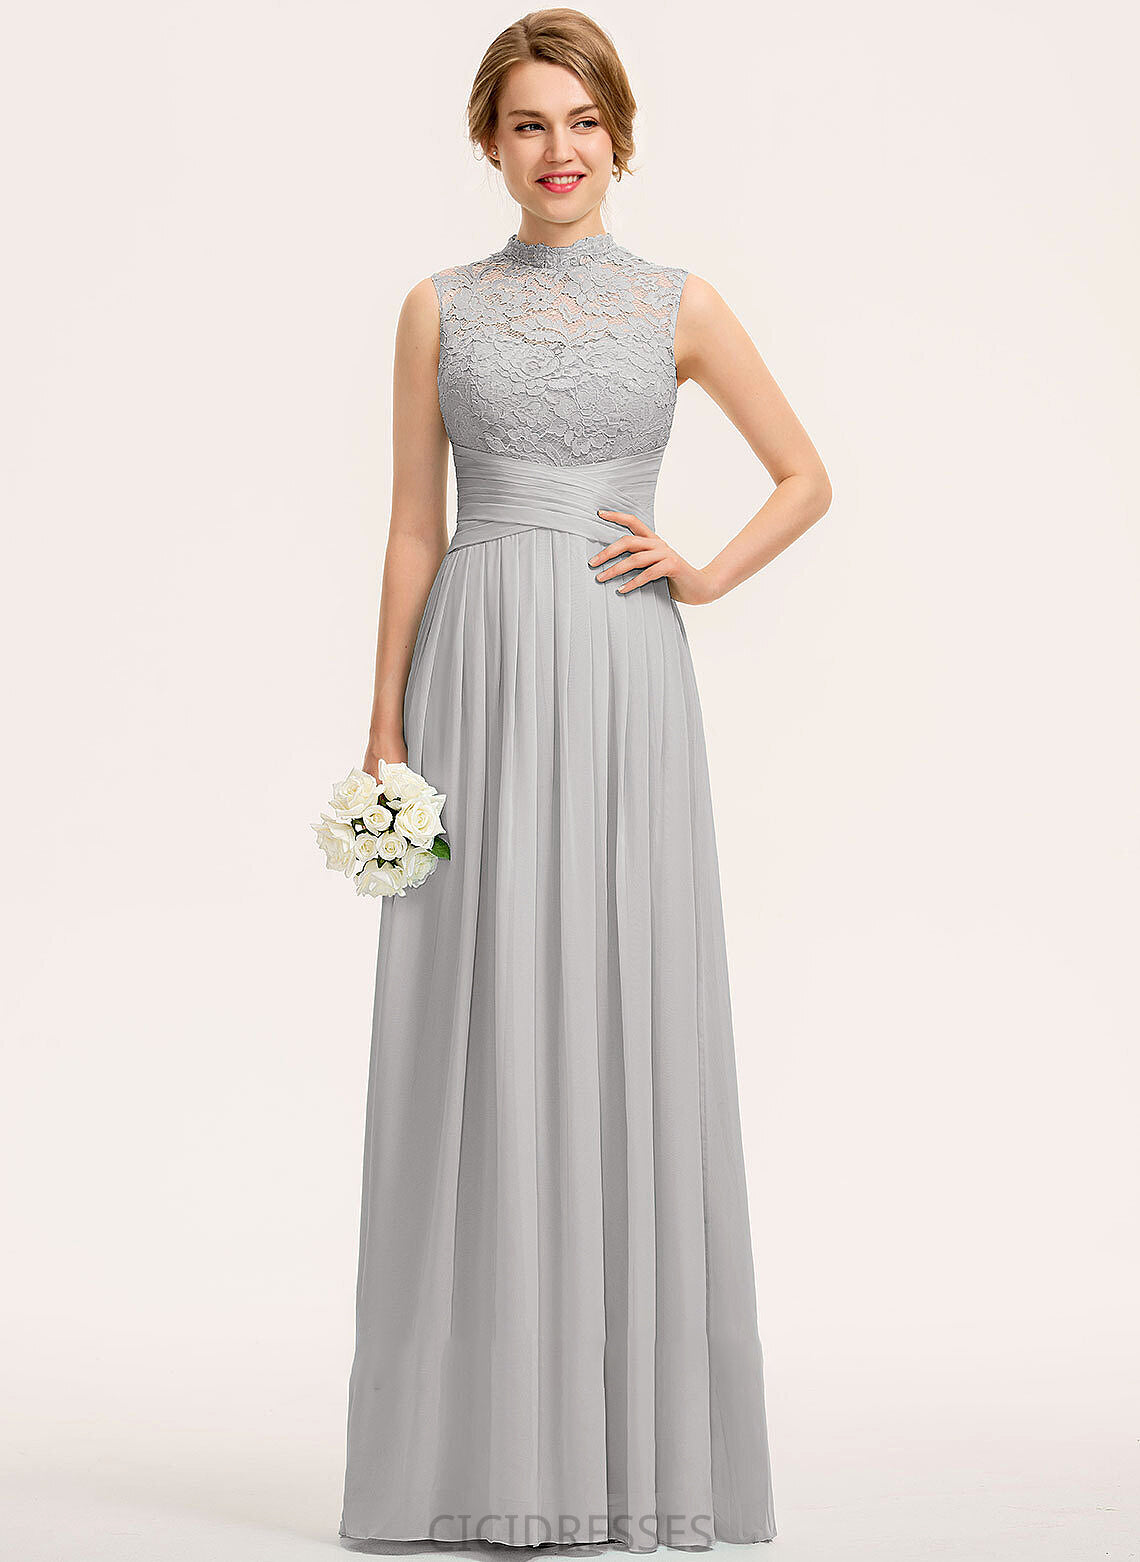 HighNeck Neckline Ruffle Length Silhouette Embellishment A-Line Floor-Length Fabric Lana Sleeveless Spaghetti Staps Bridesmaid Dresses